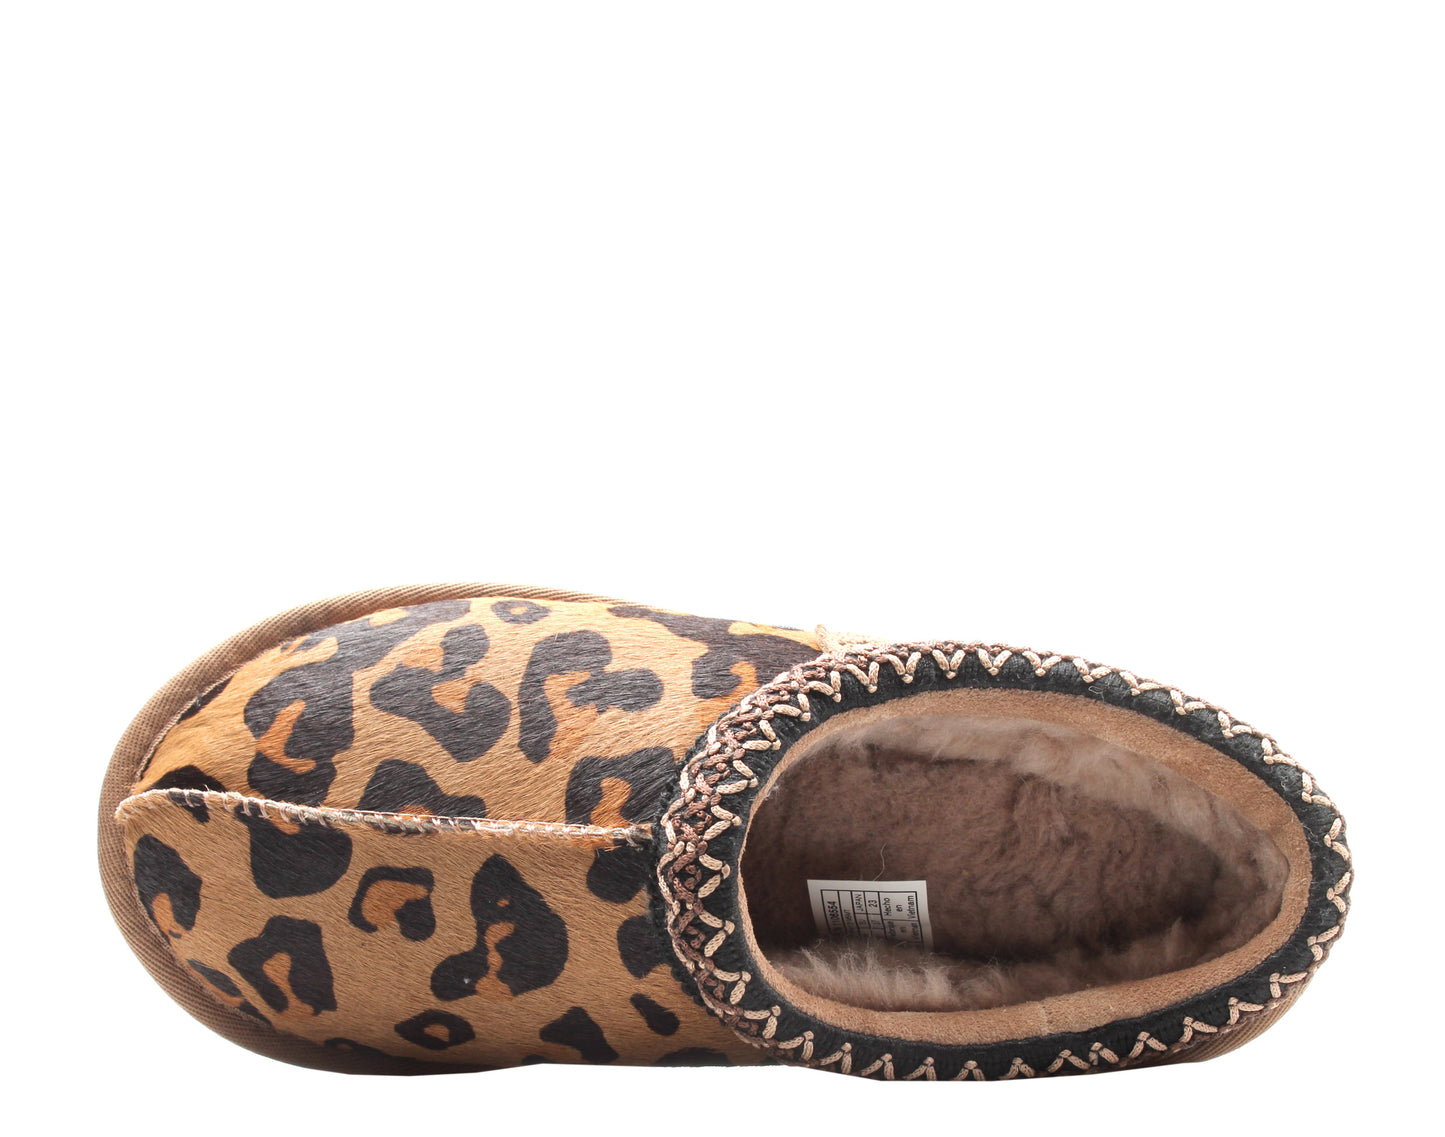 UGG Australia Tasman Leopard Slip-On Amphora Women's Slippers 1106554-AMP